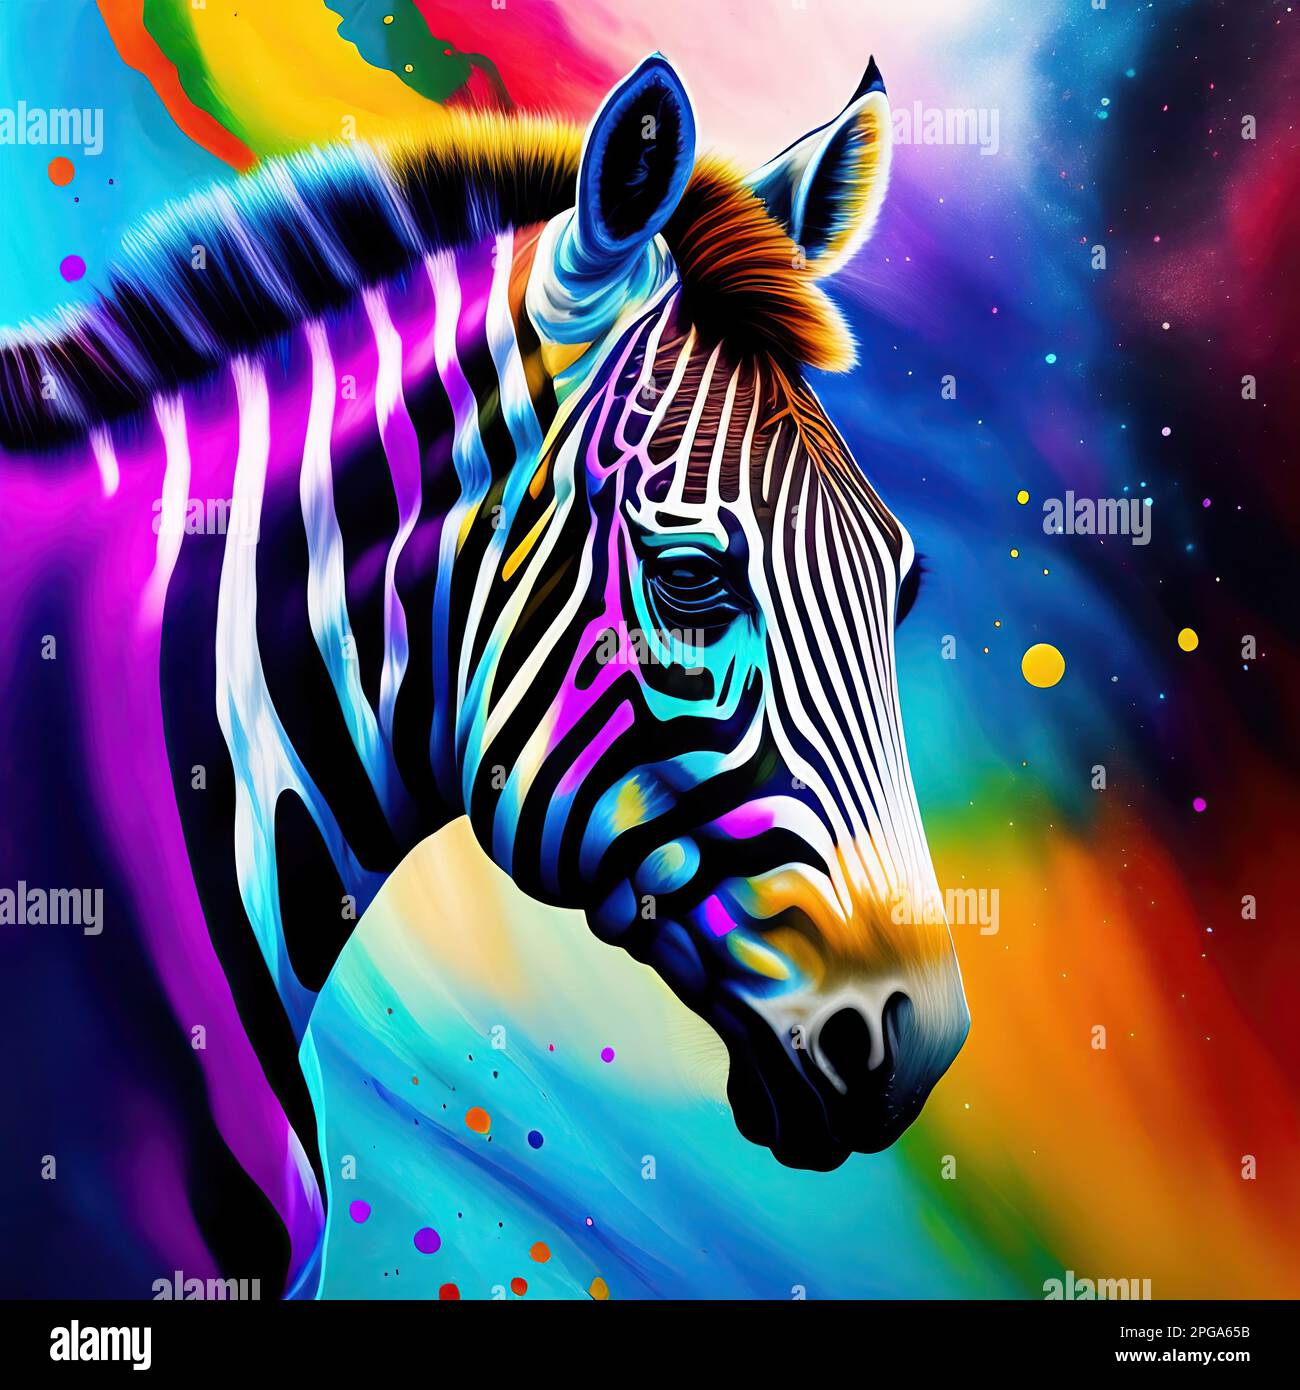 Illustration of zebra head in abstract splash style Stock Photo